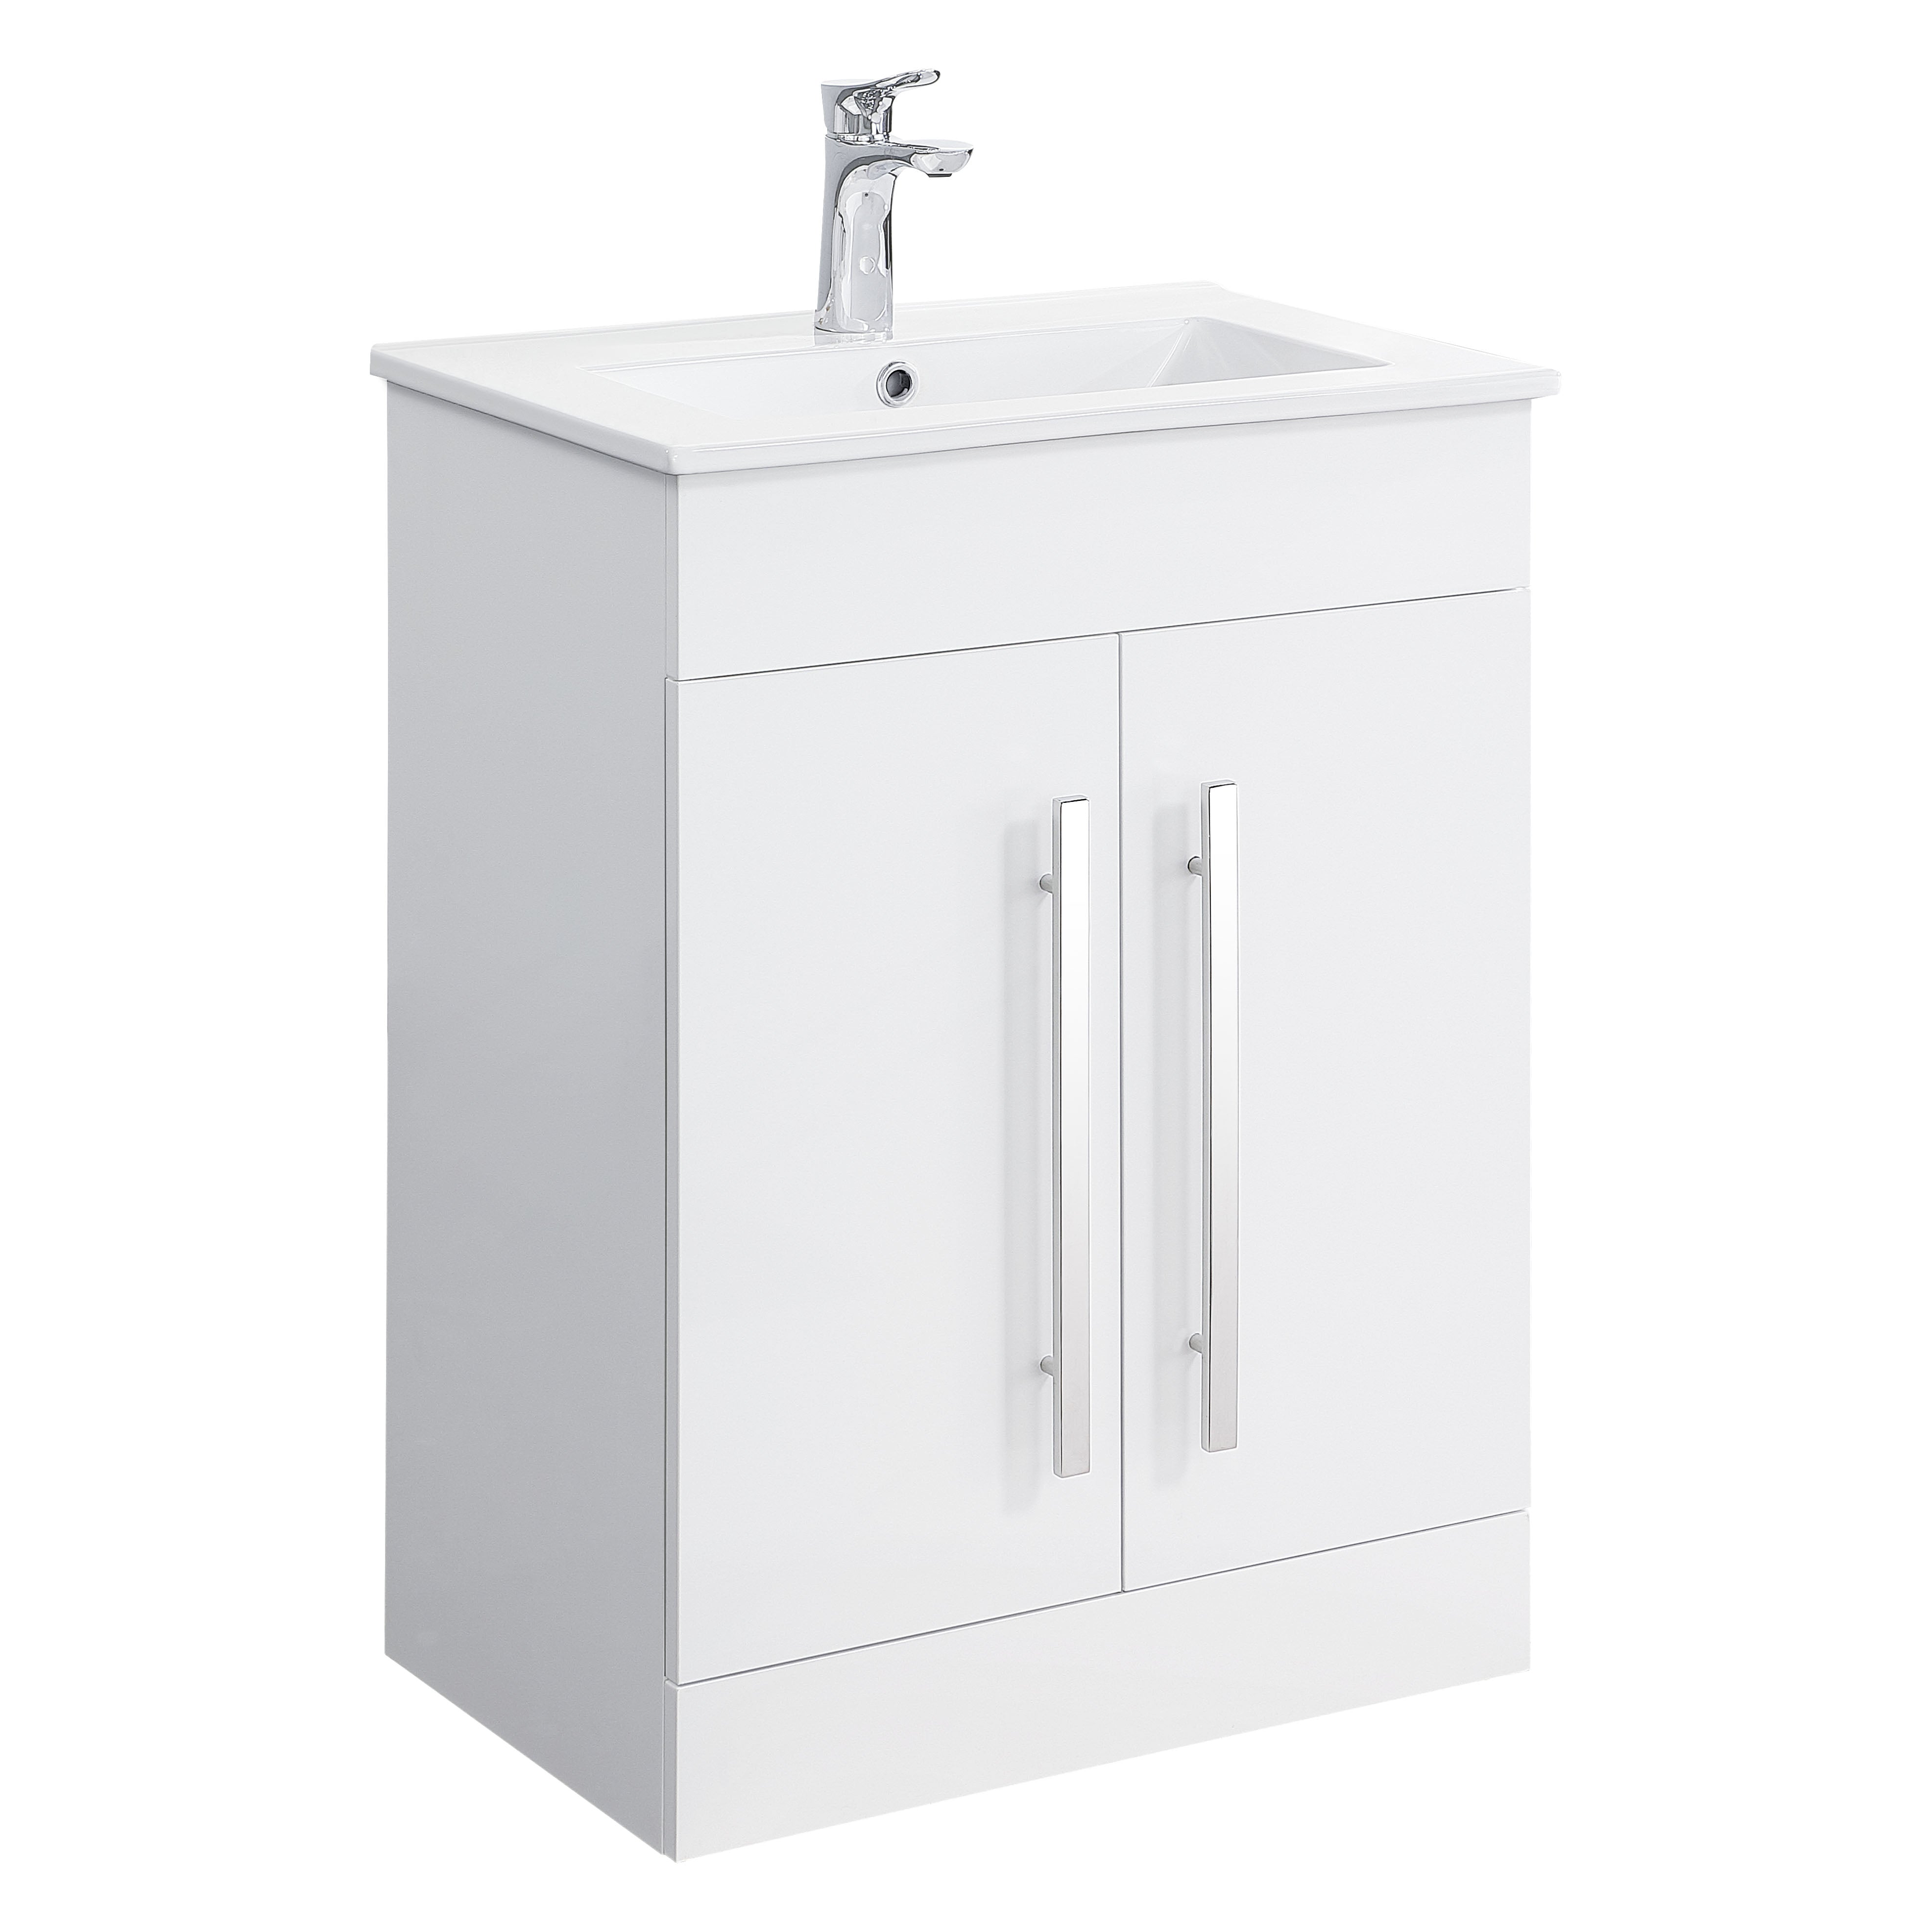 Avon Bathroom Suite - Gloss White